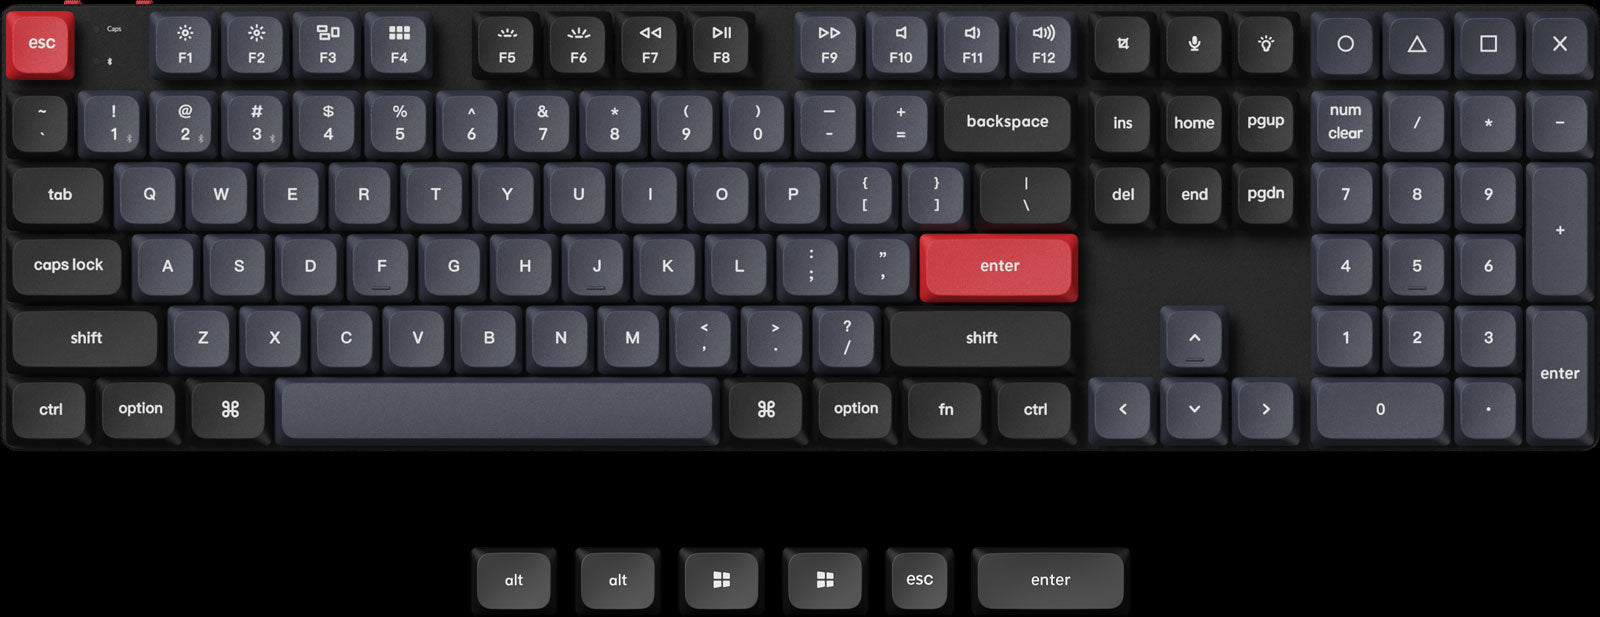 Keychron K5 Pro Low profile mechanical keyboard